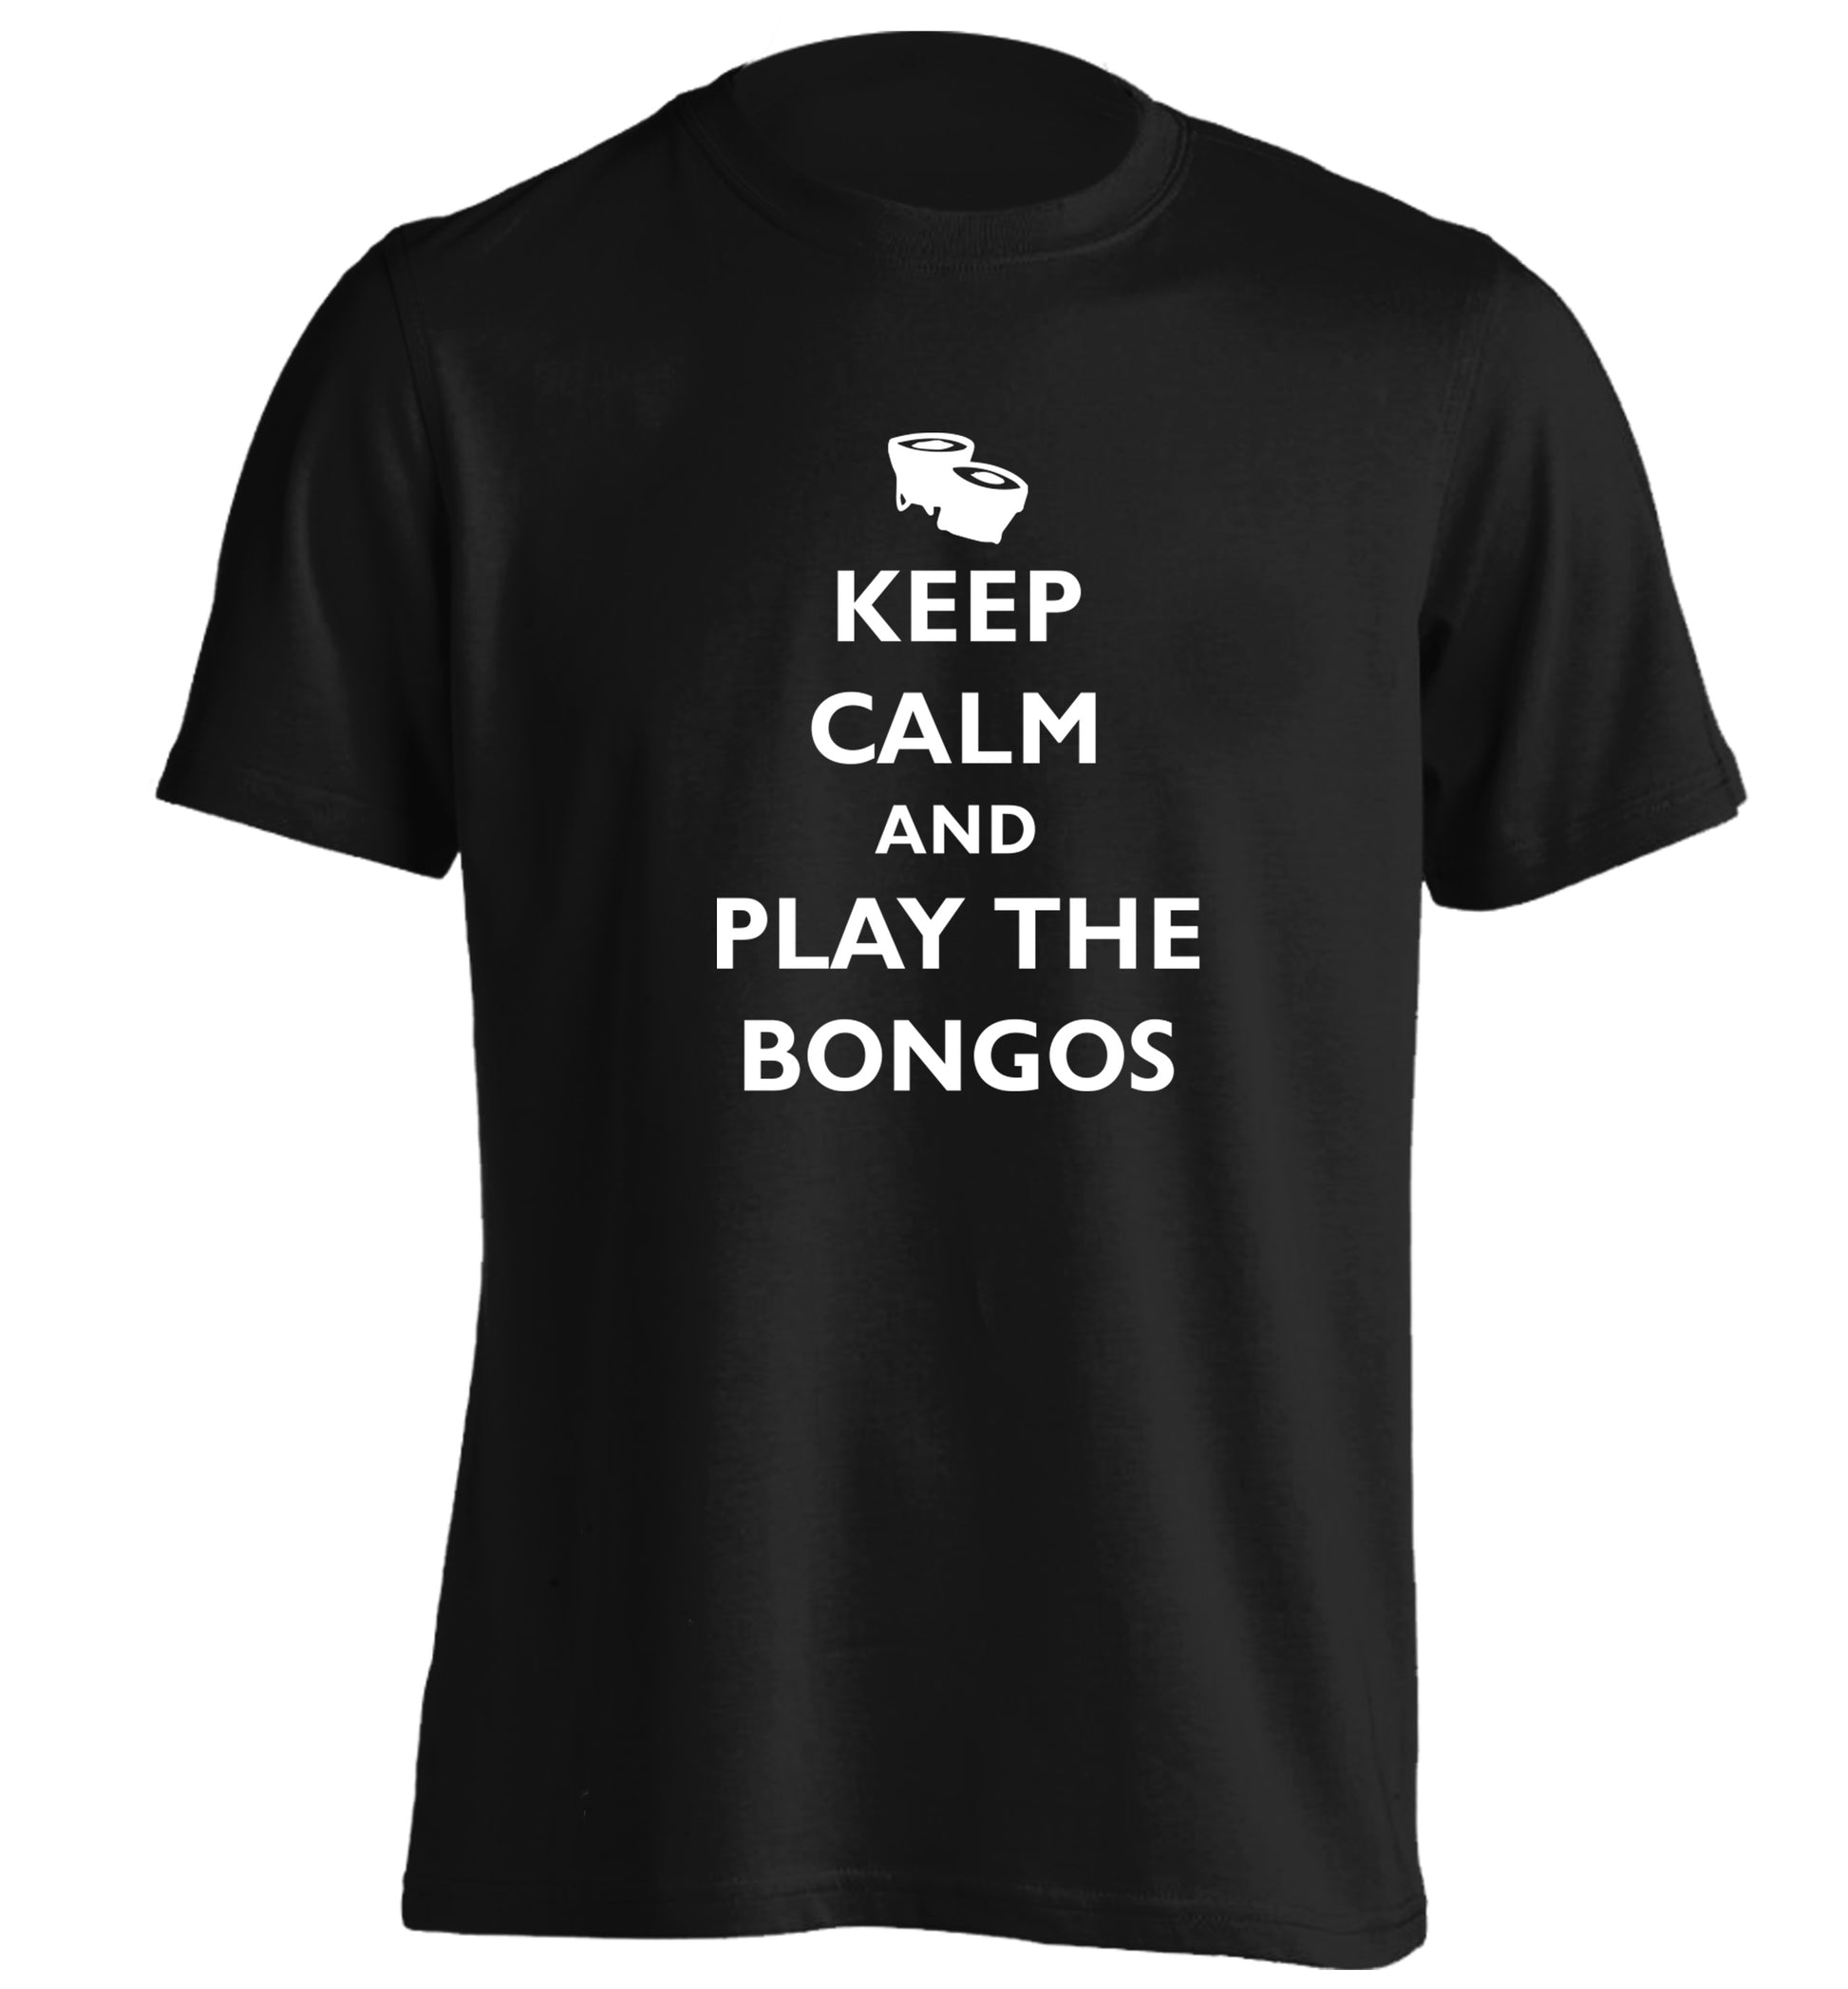 Keep calm and play the bongos adults unisex black Tshirt 2XL